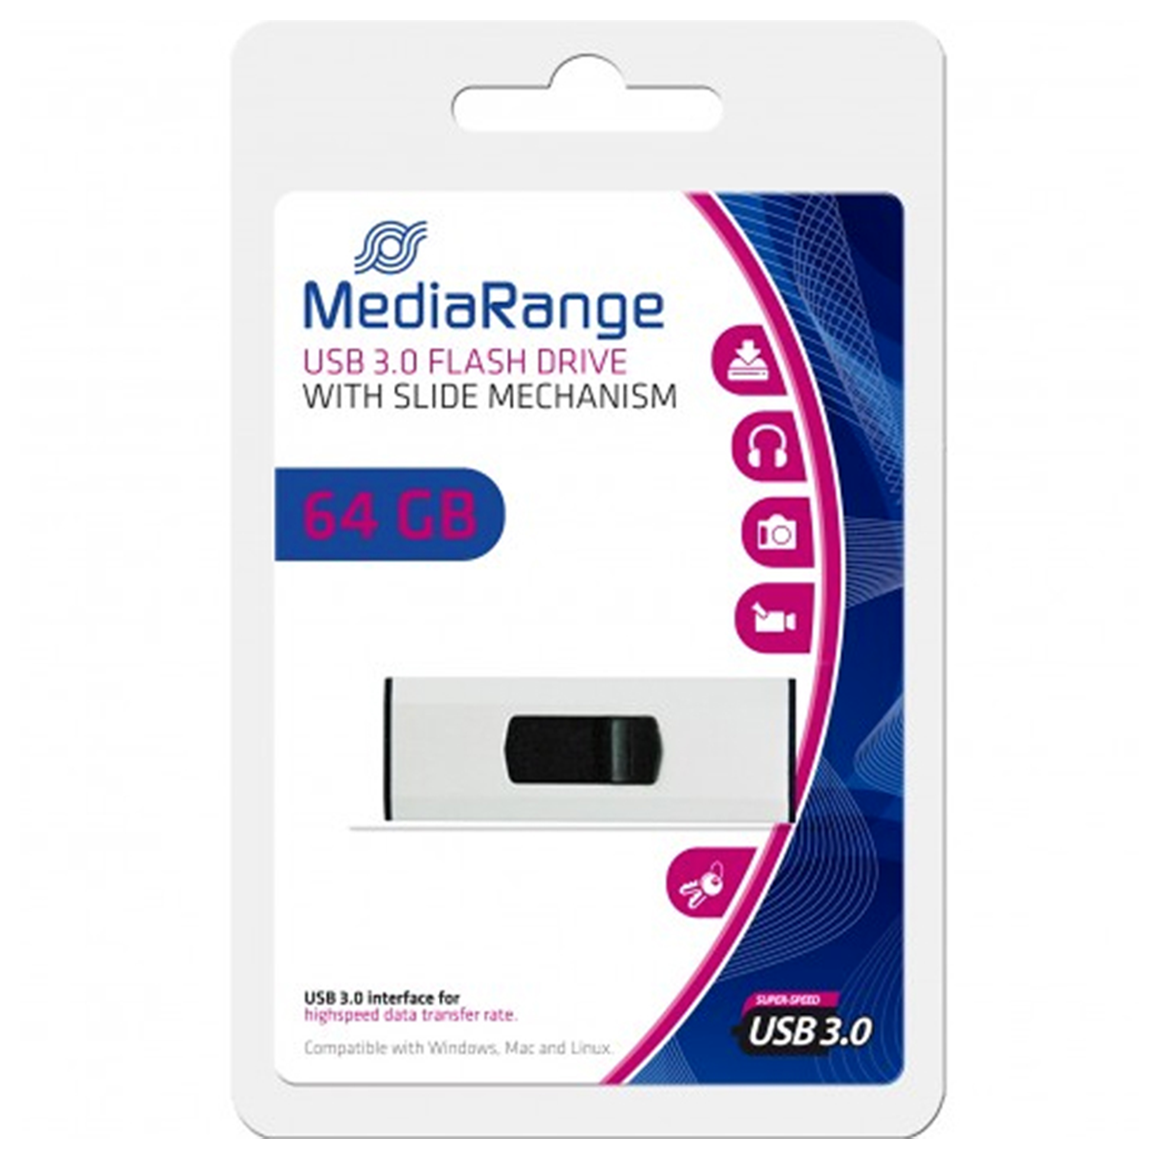 MediaRange USB 3.0 Flash Drive, 64 GB